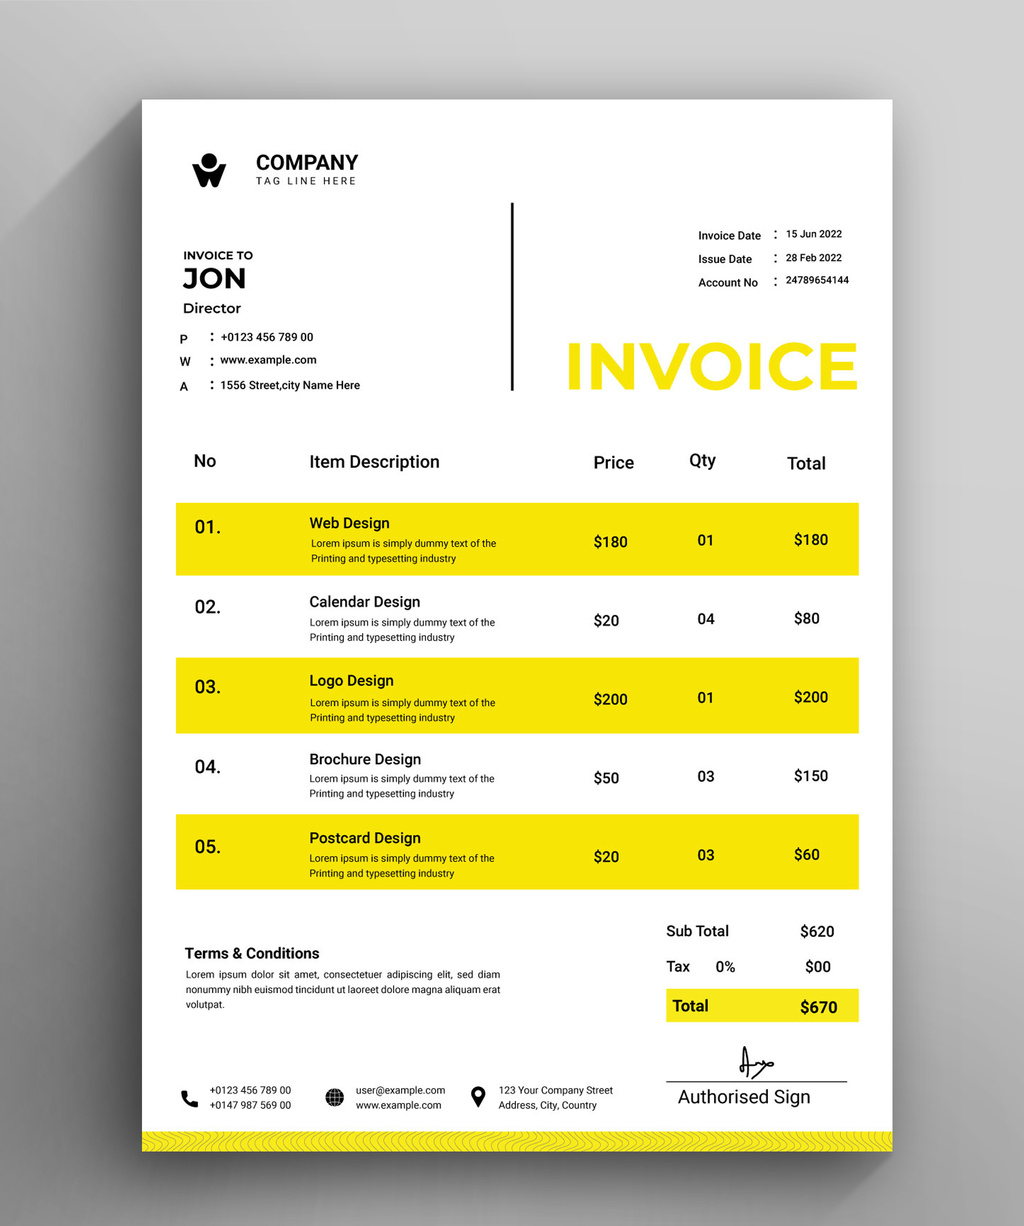 Minimal Invoice Layout (AI Format)